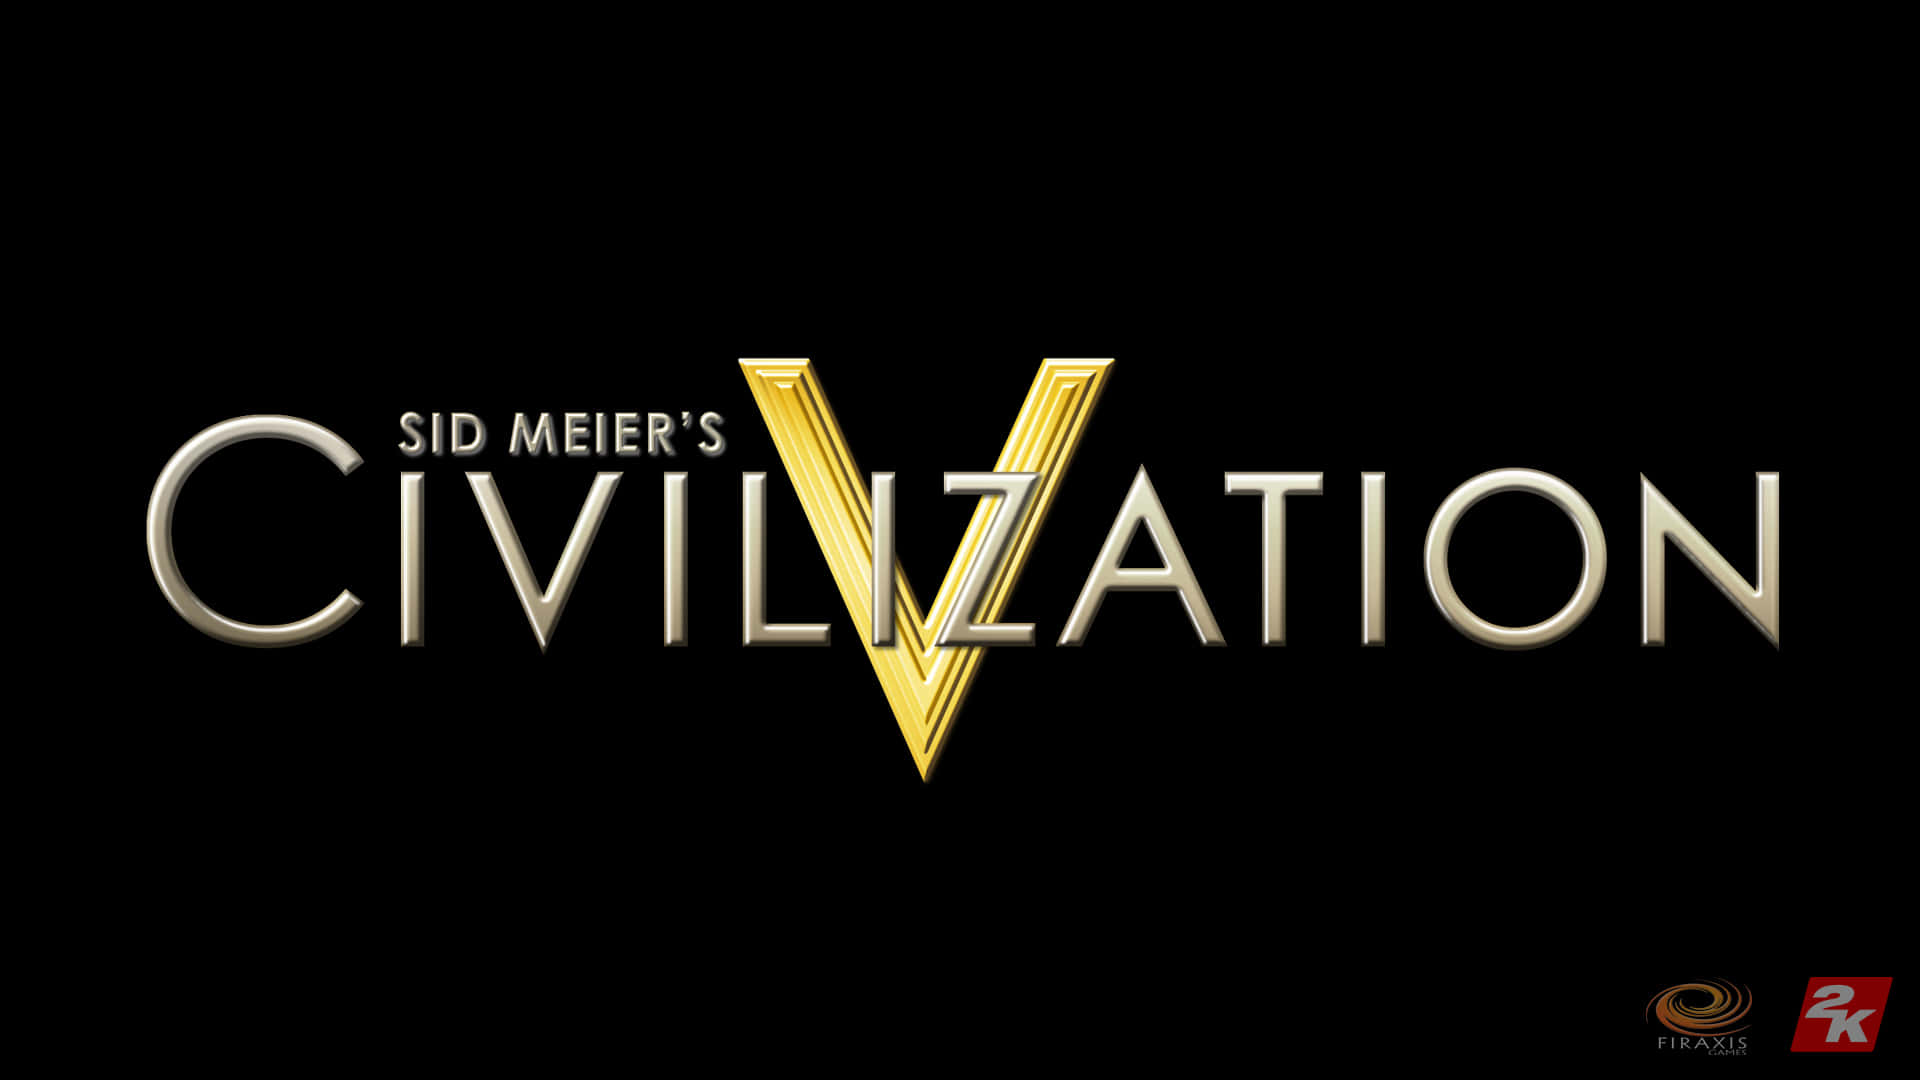 Civilization V in stunning 1080p